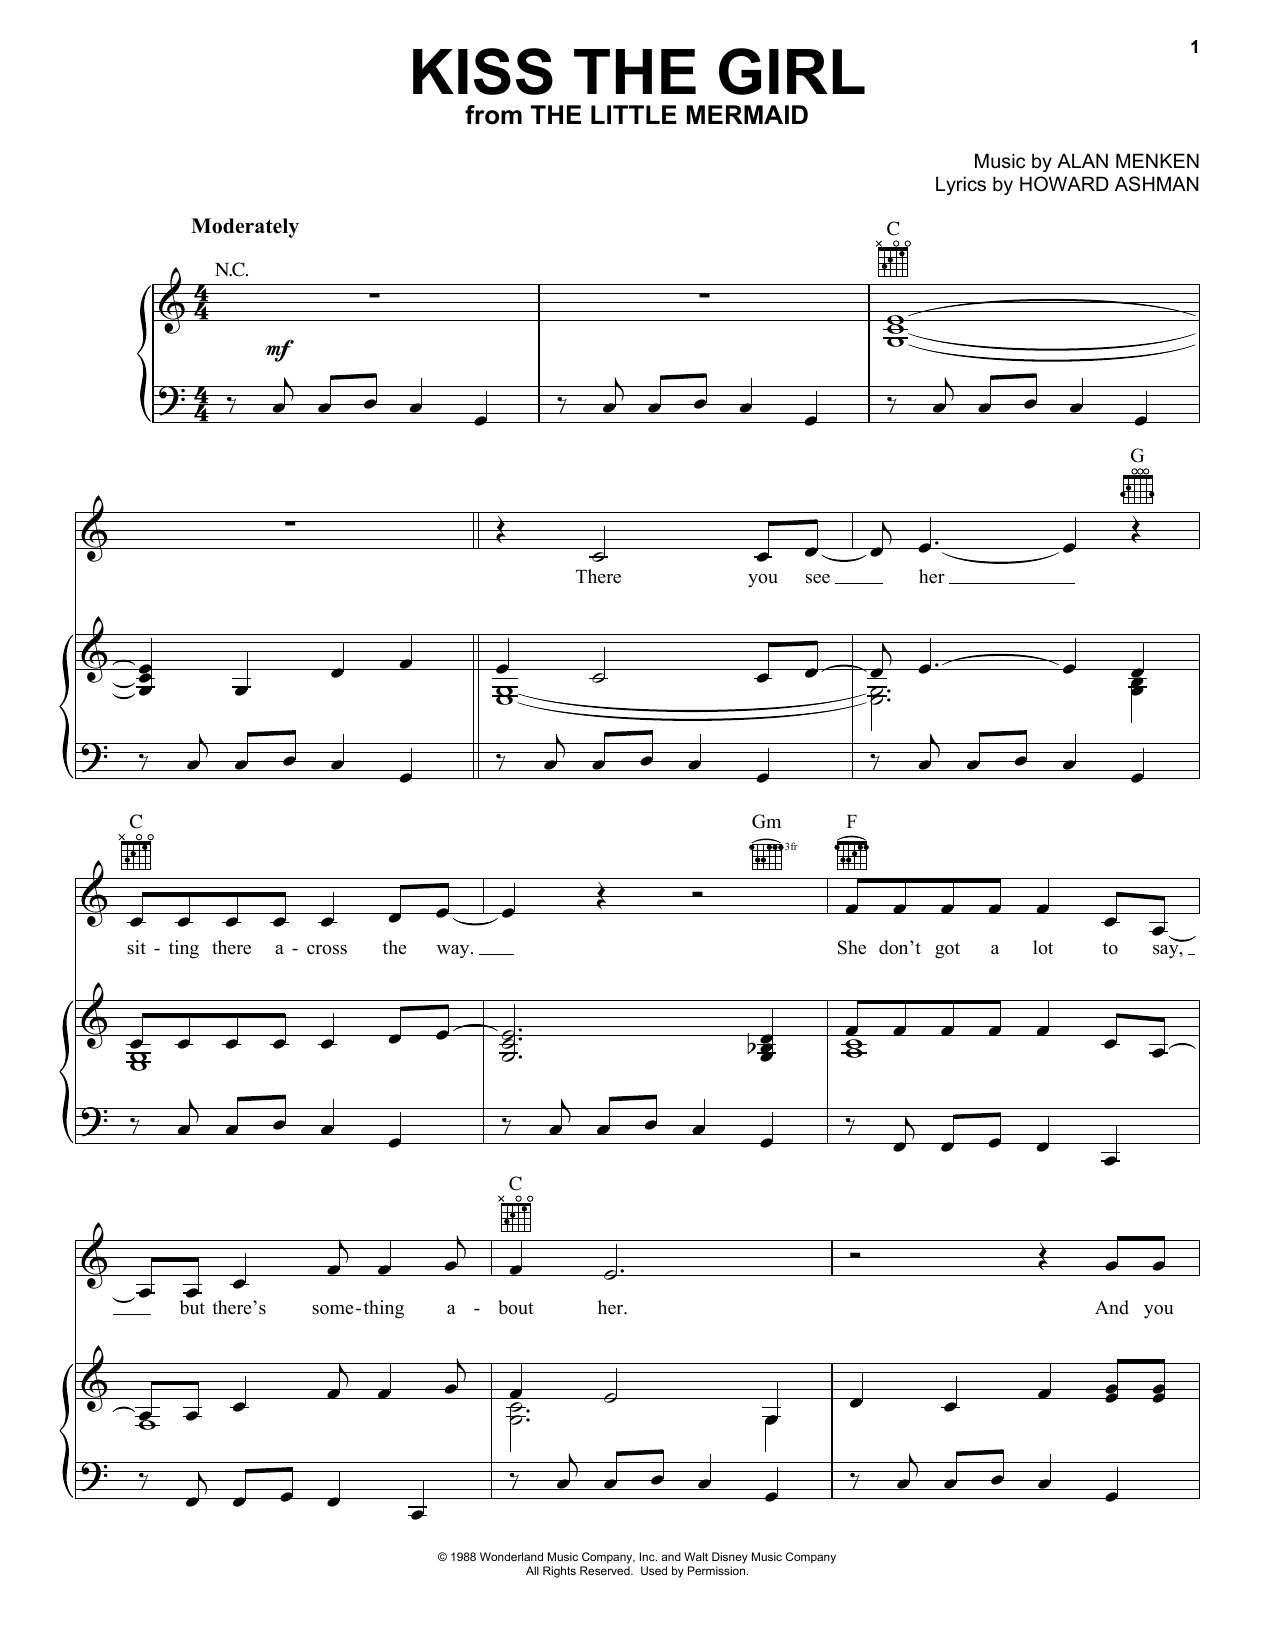 Alan Menken & Howard Ashman Kiss The Girl (from The Little Mermaid) Sheet Music Notes & Chords for Trombone - Download or Print PDF